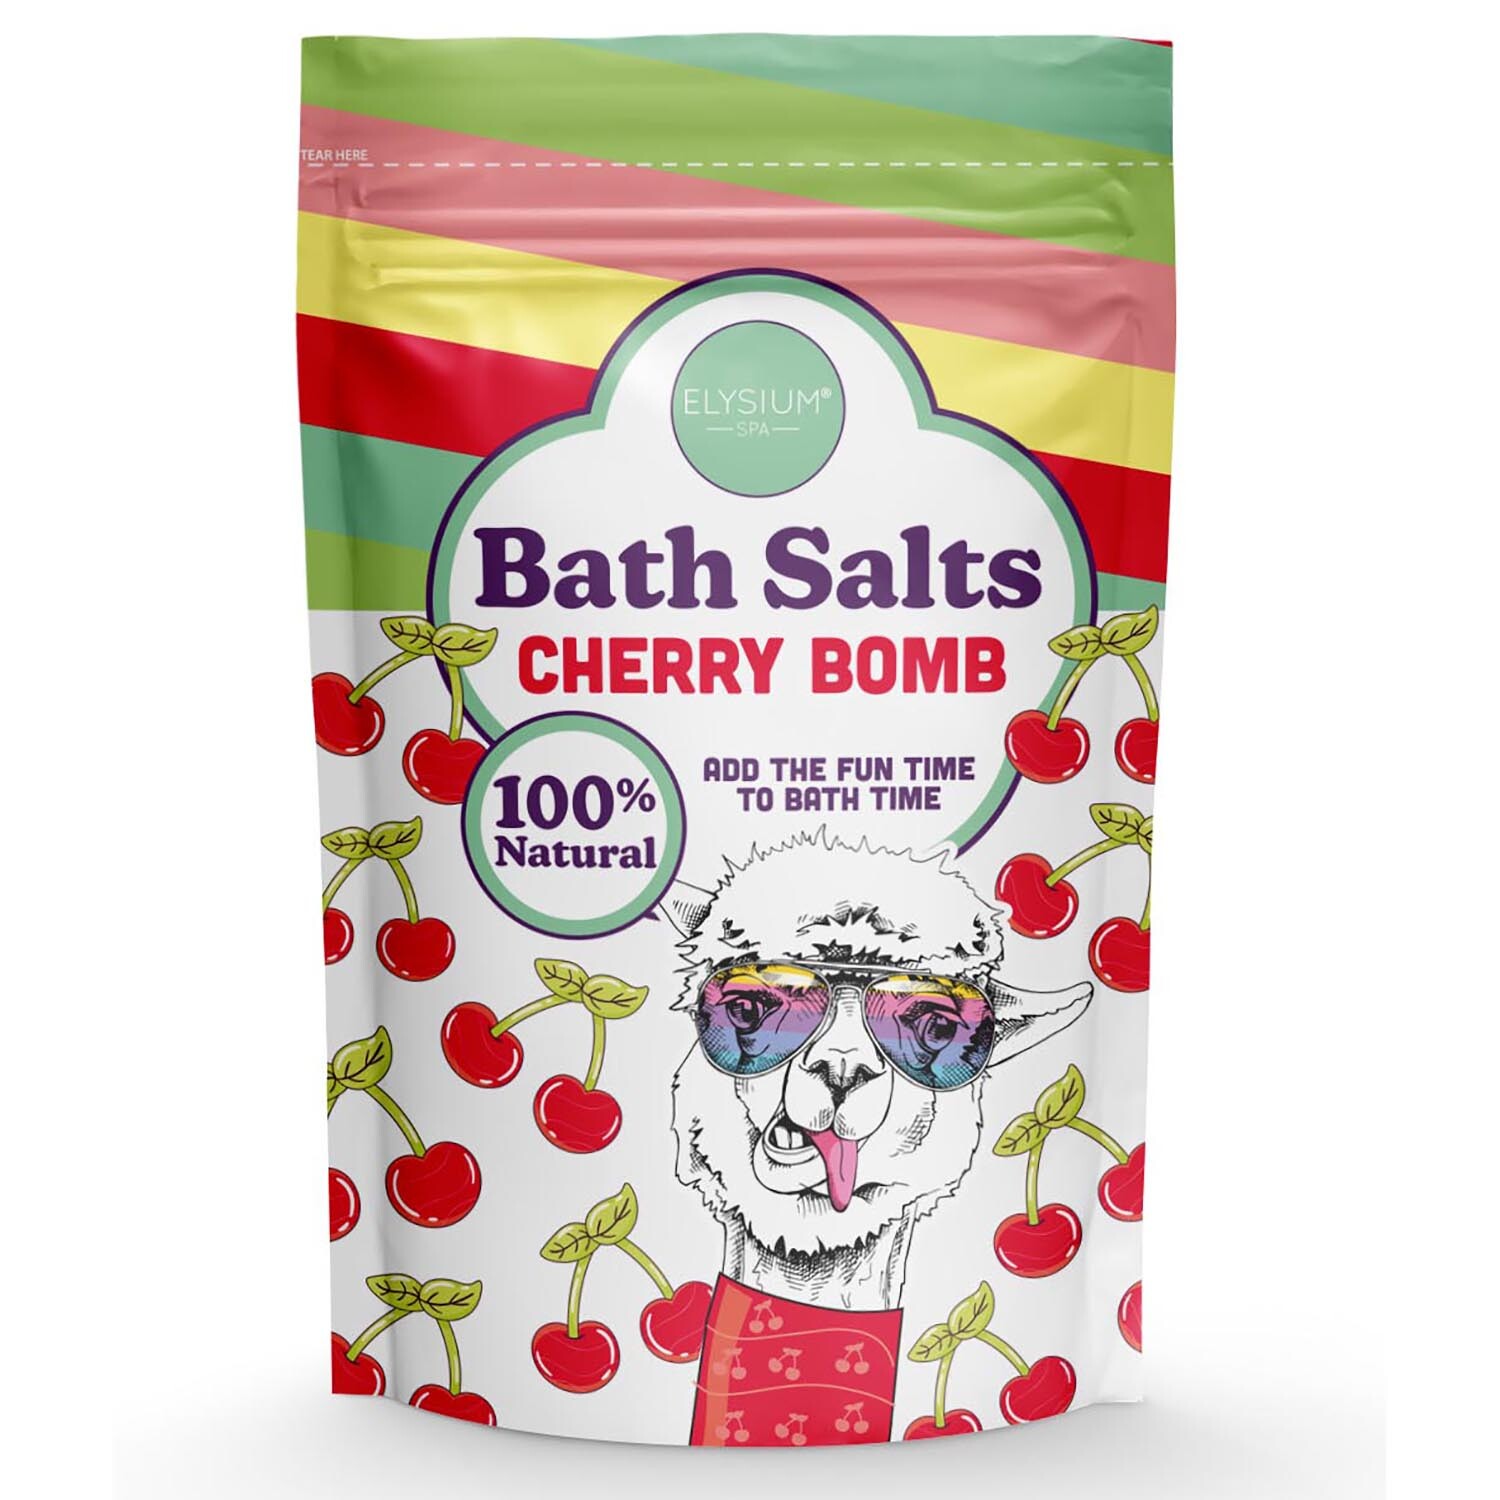 Elysium Spa Cherry Bomb Bath Salts - Red Image